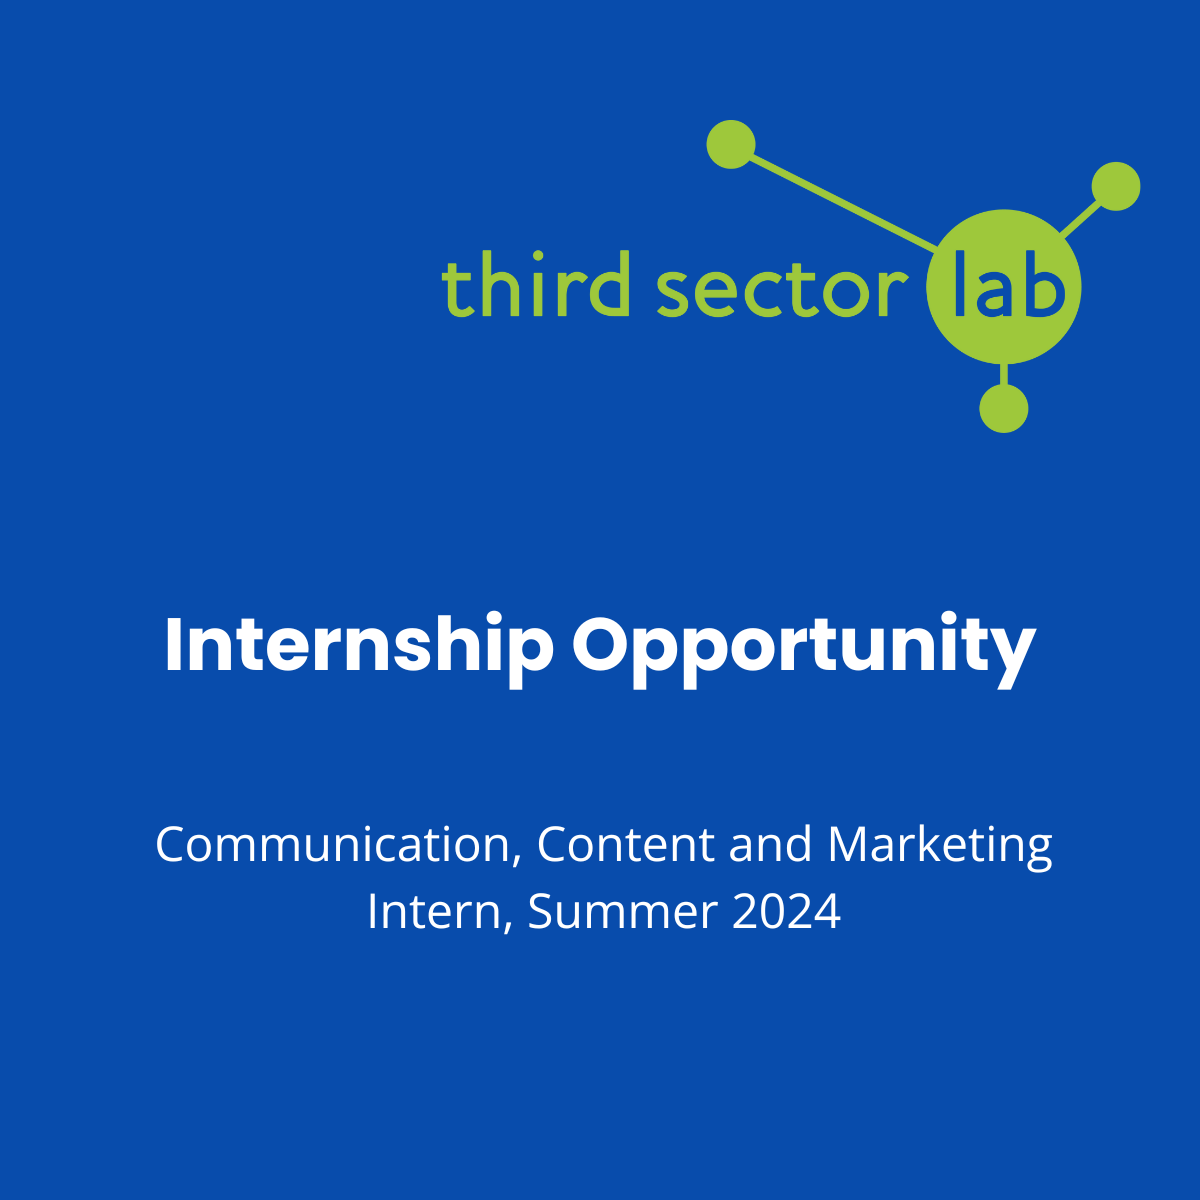 Internship Opportunity: Communication, Content and Marketing Intern, Summer 2024